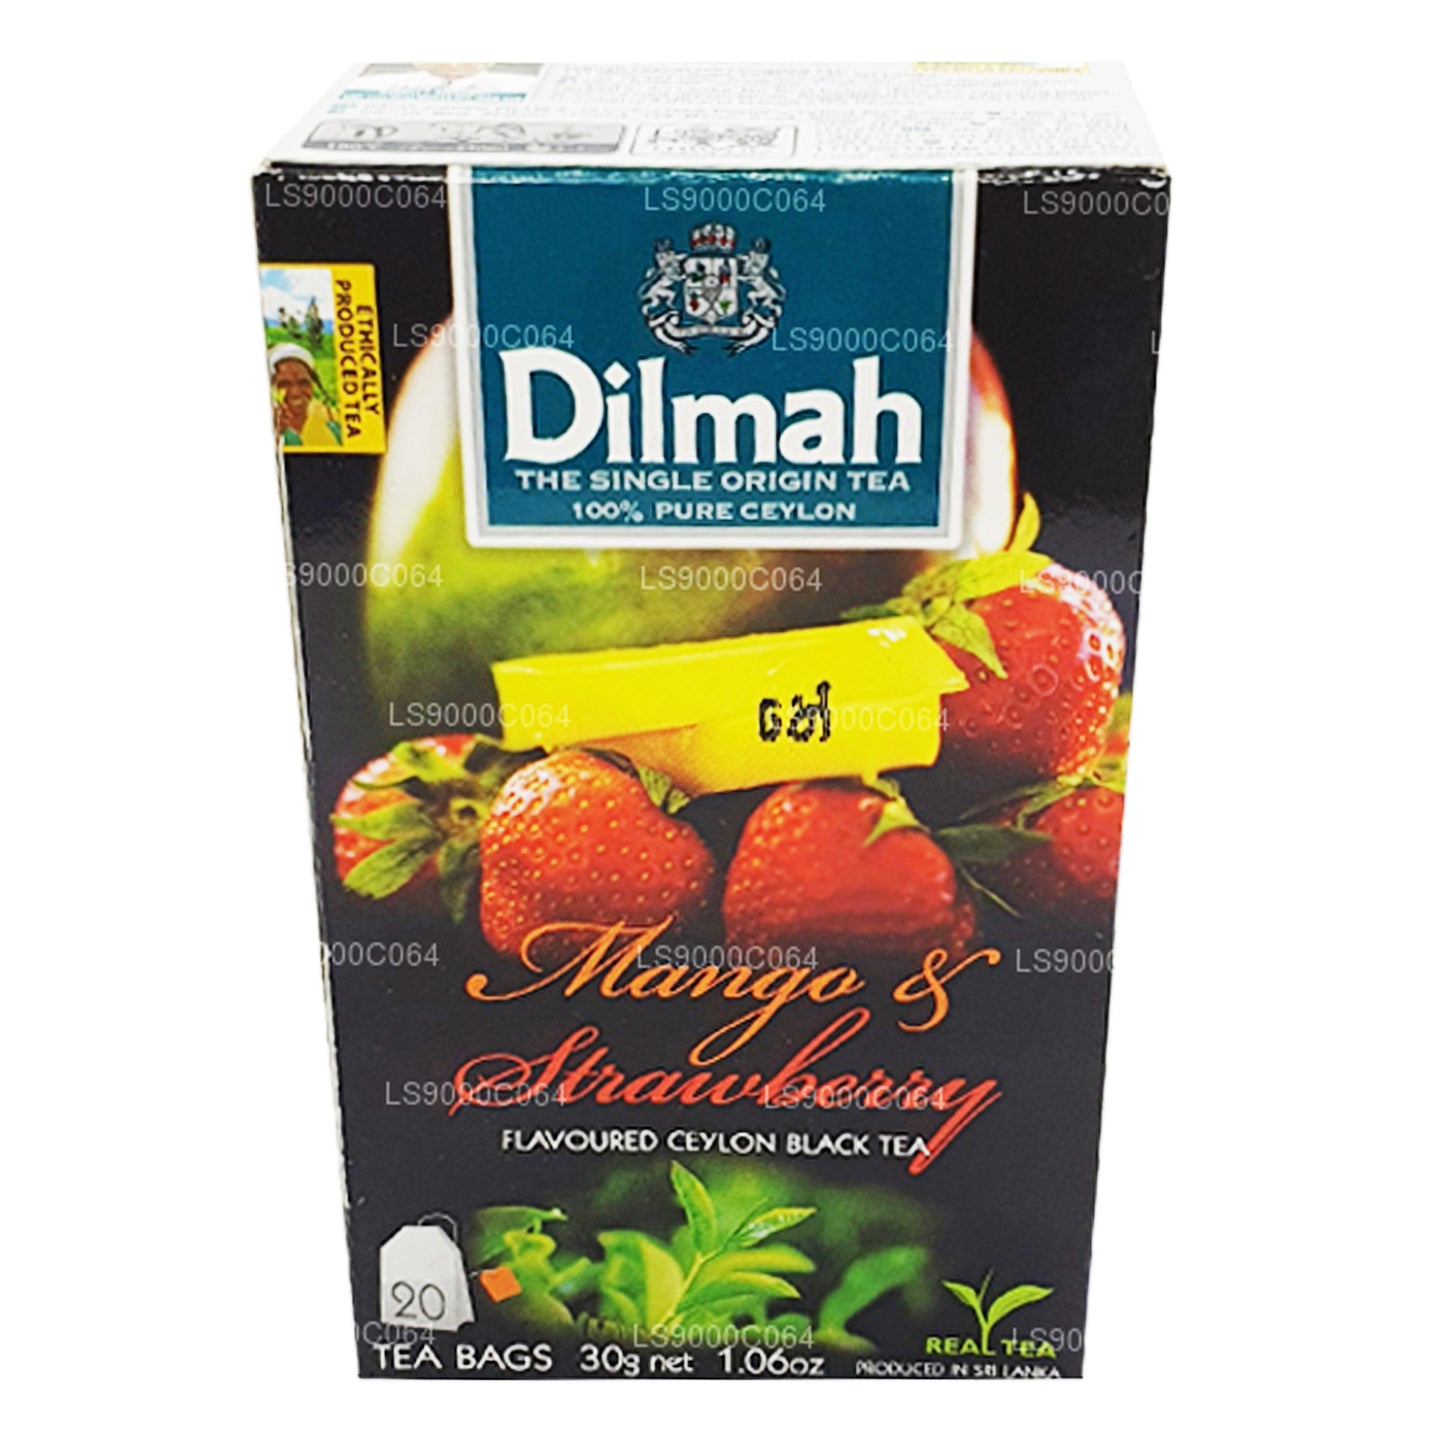 Dilmah マンゴーとストロベリーフレーバーティー (30g) 20ティーバッグ